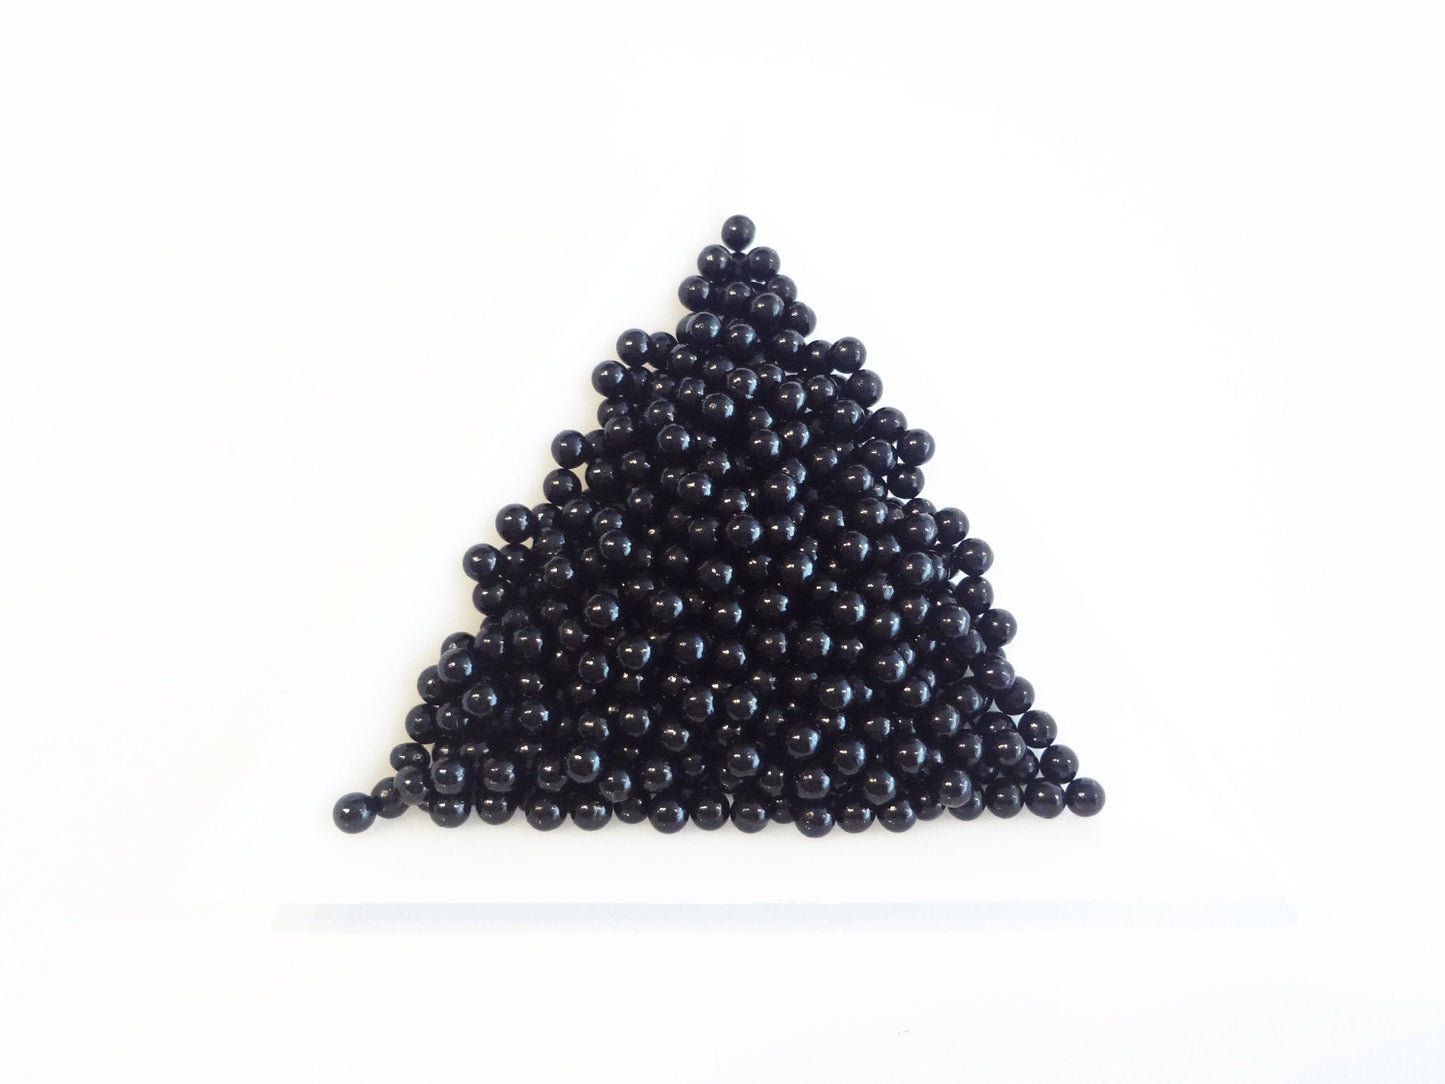 3mm Black Boba Pearls, No Hole Beads